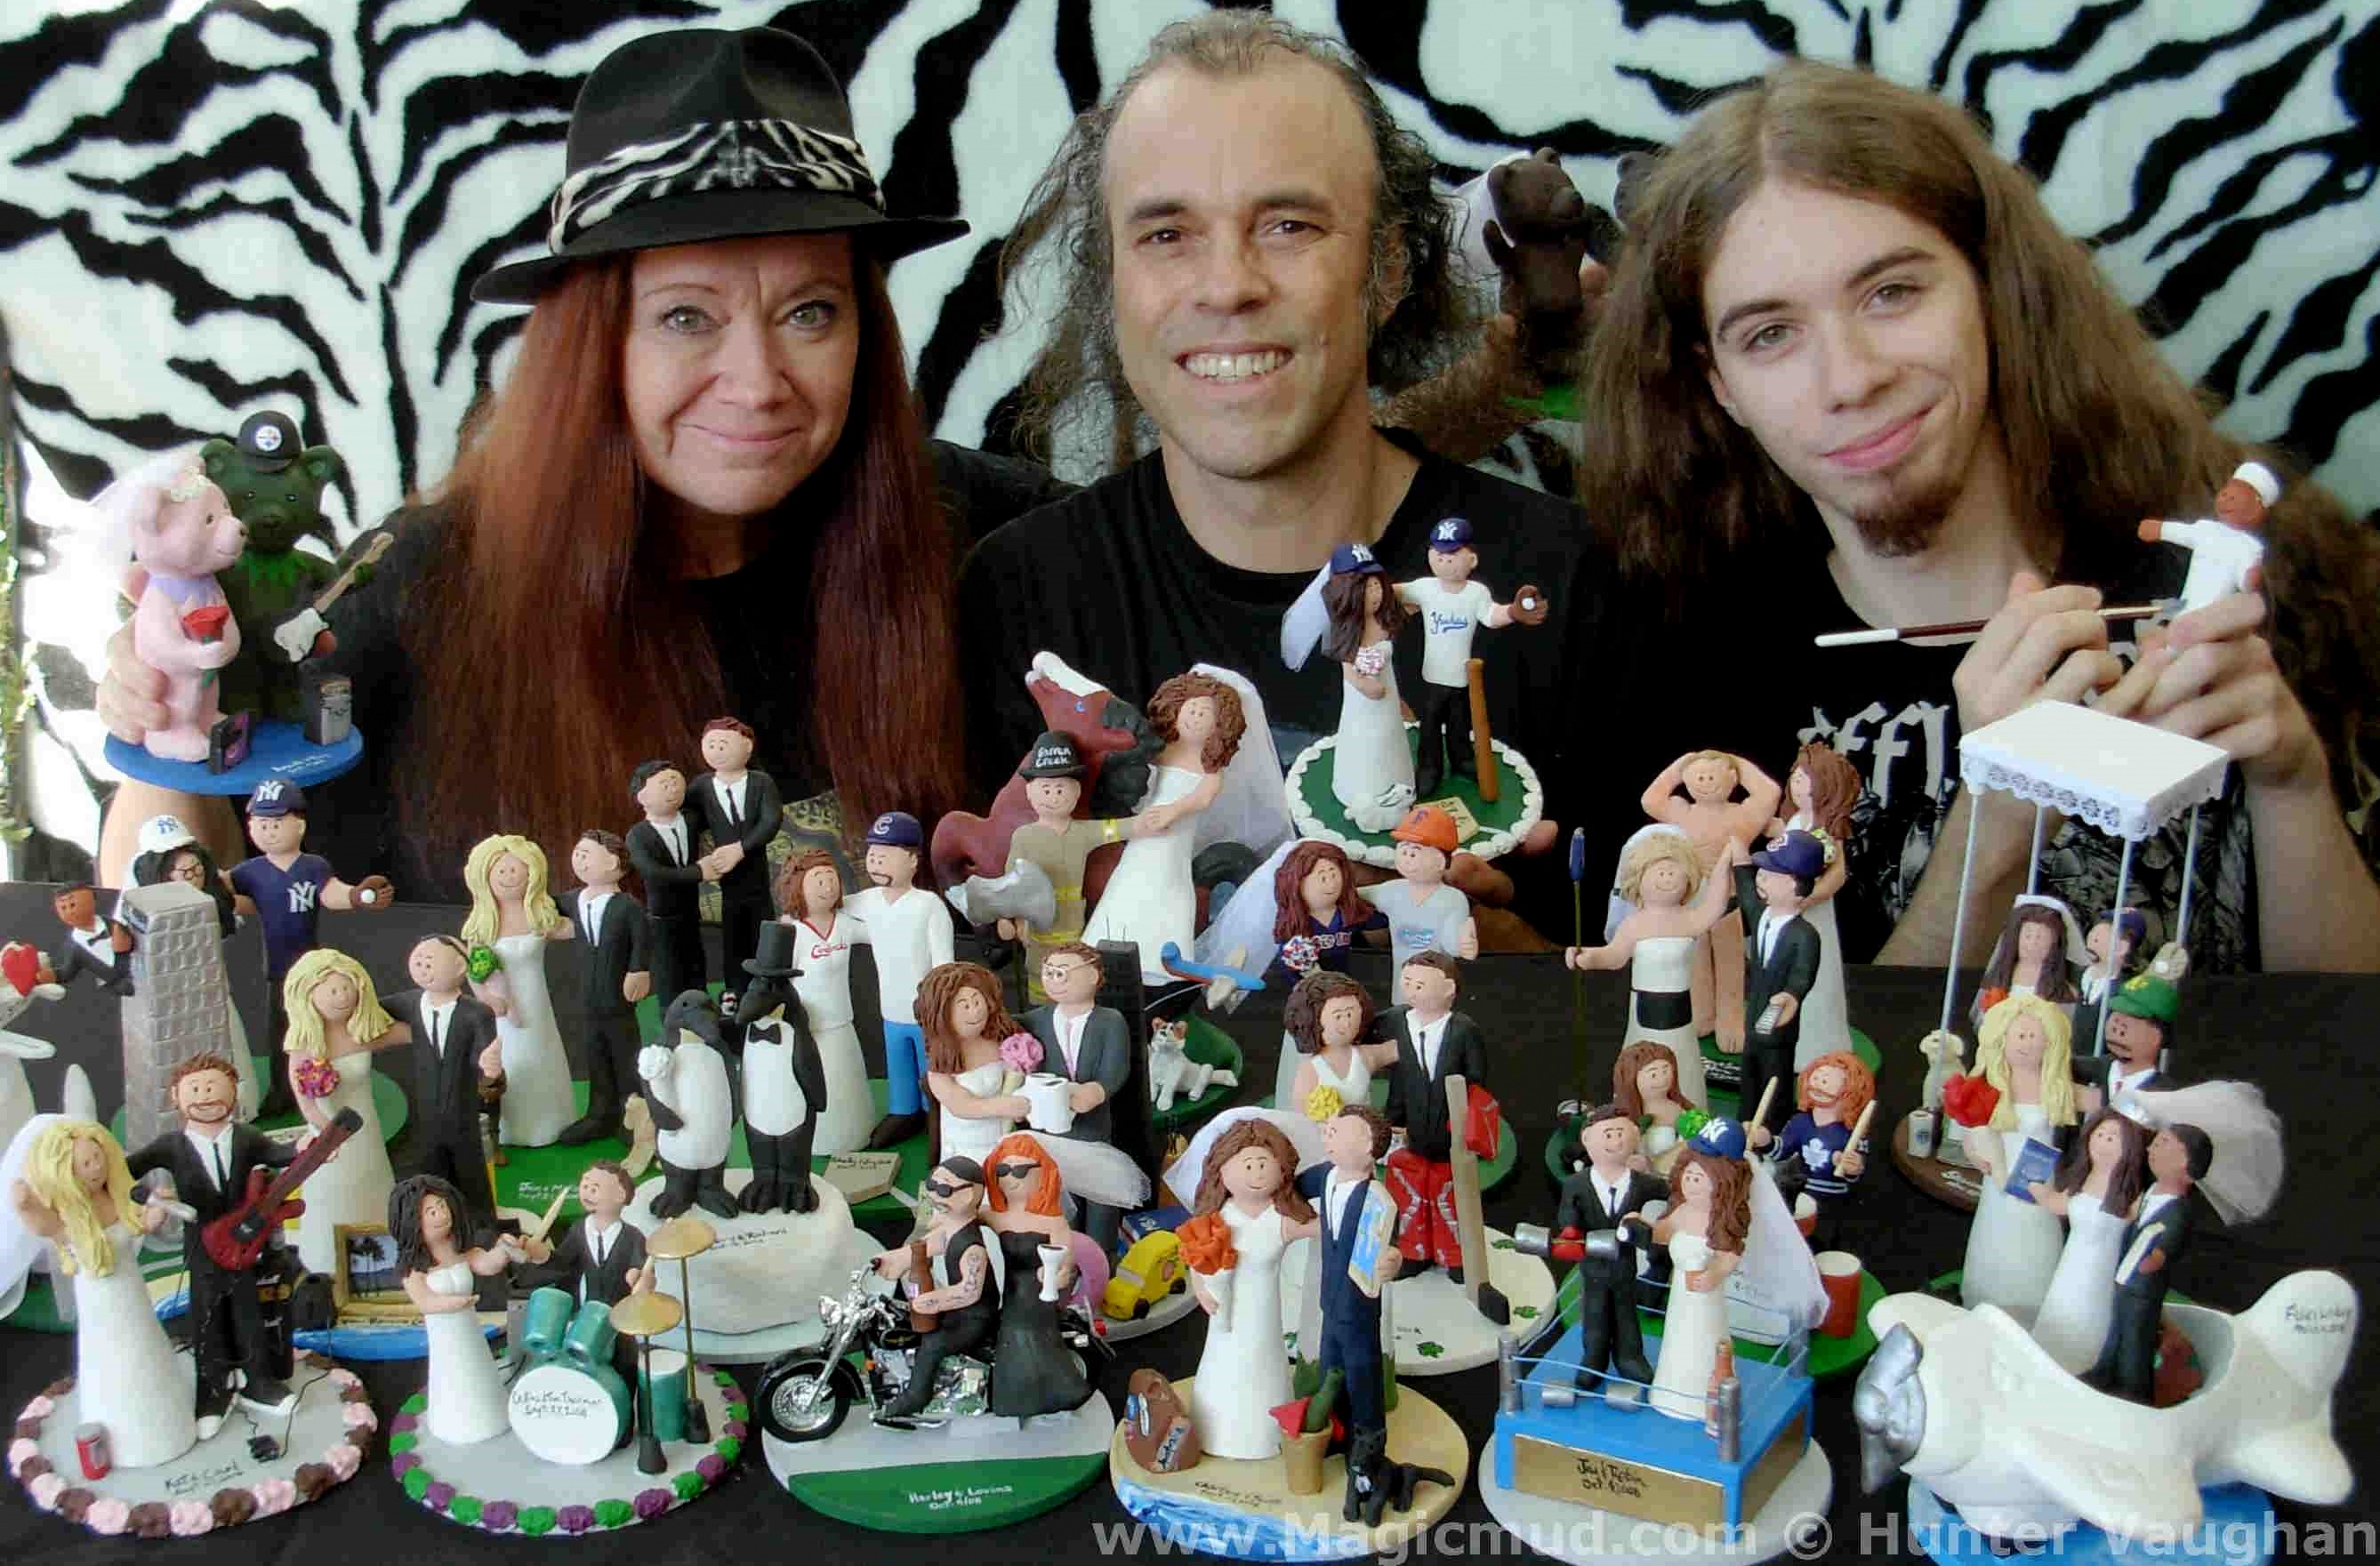 Custom Wedding Cake Toppers created by Magicmud